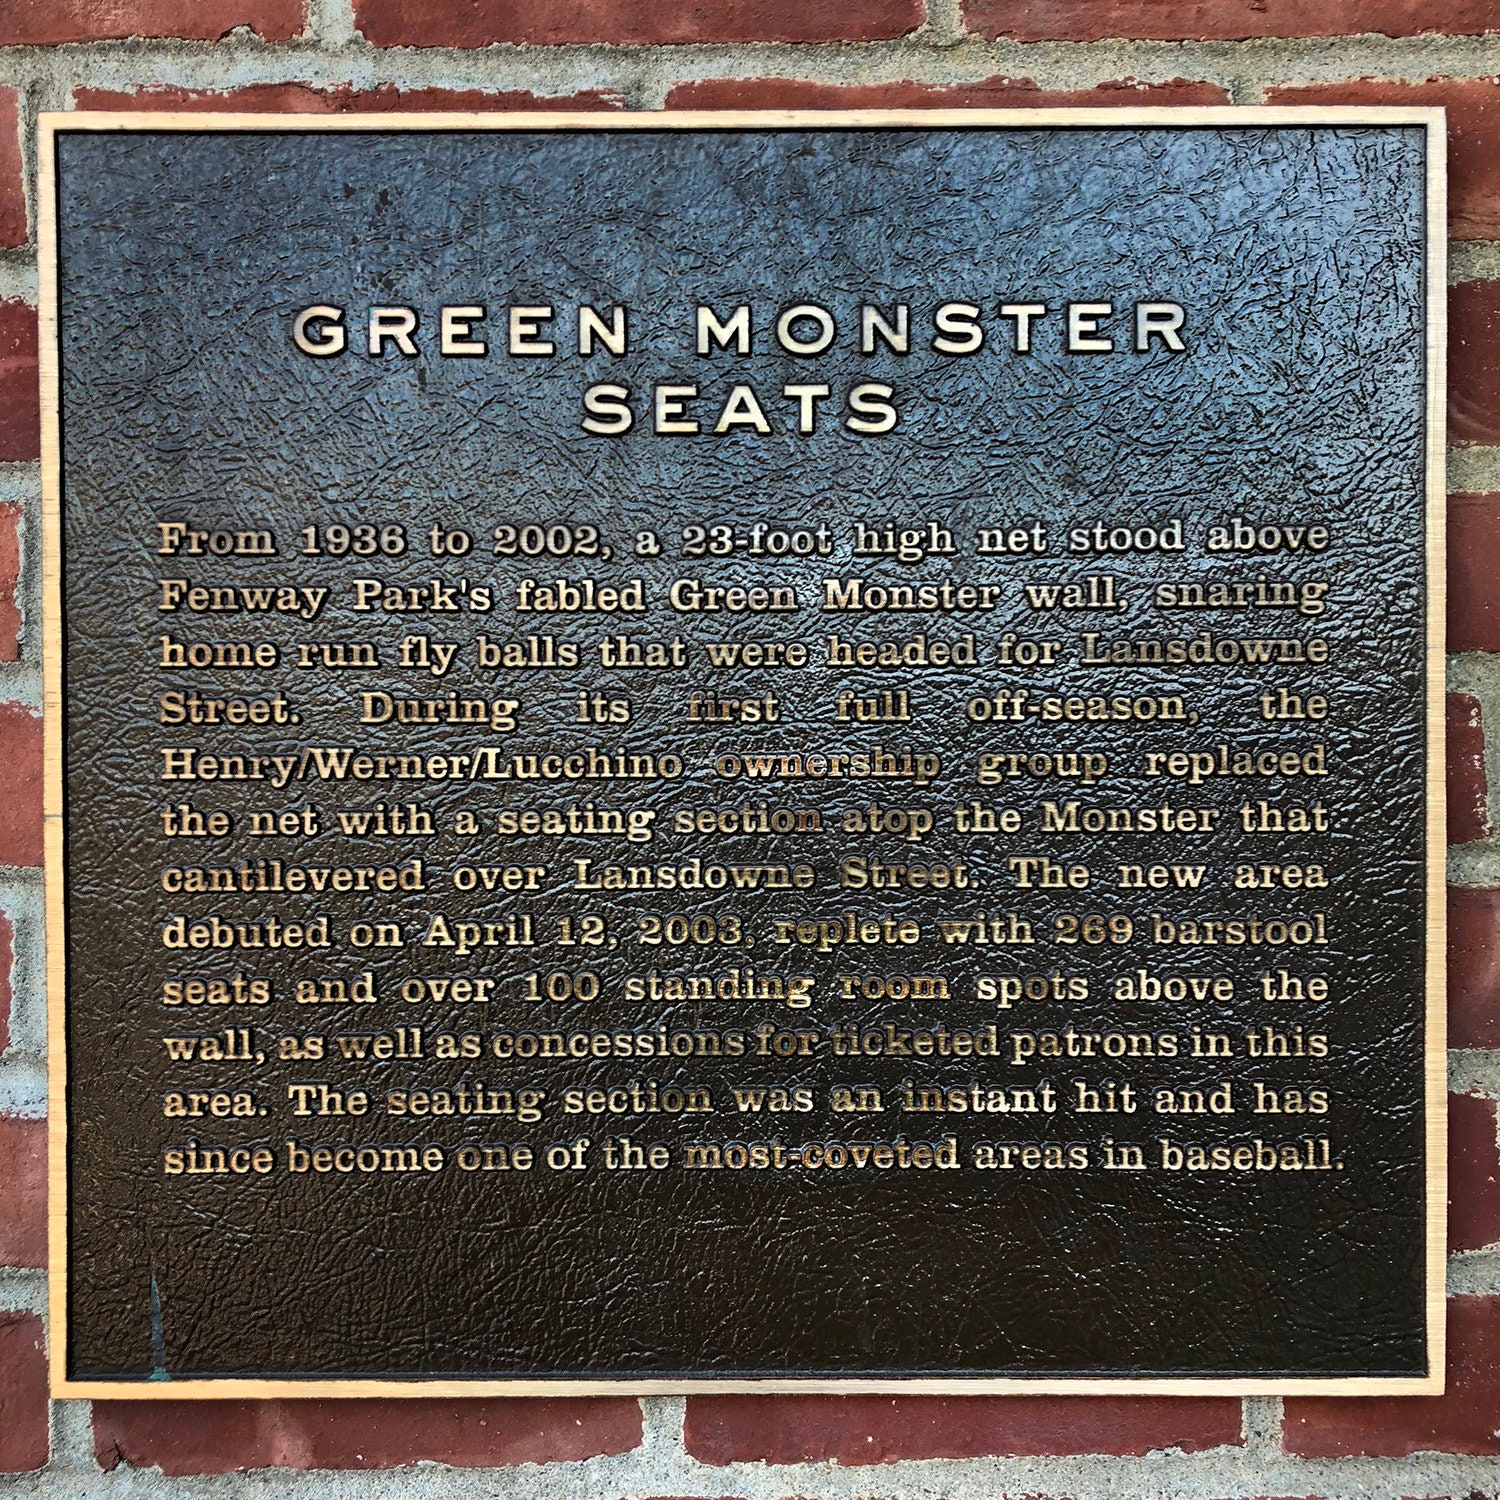 Boston Red Sox Fenway Park The Green Monster Framed Poster